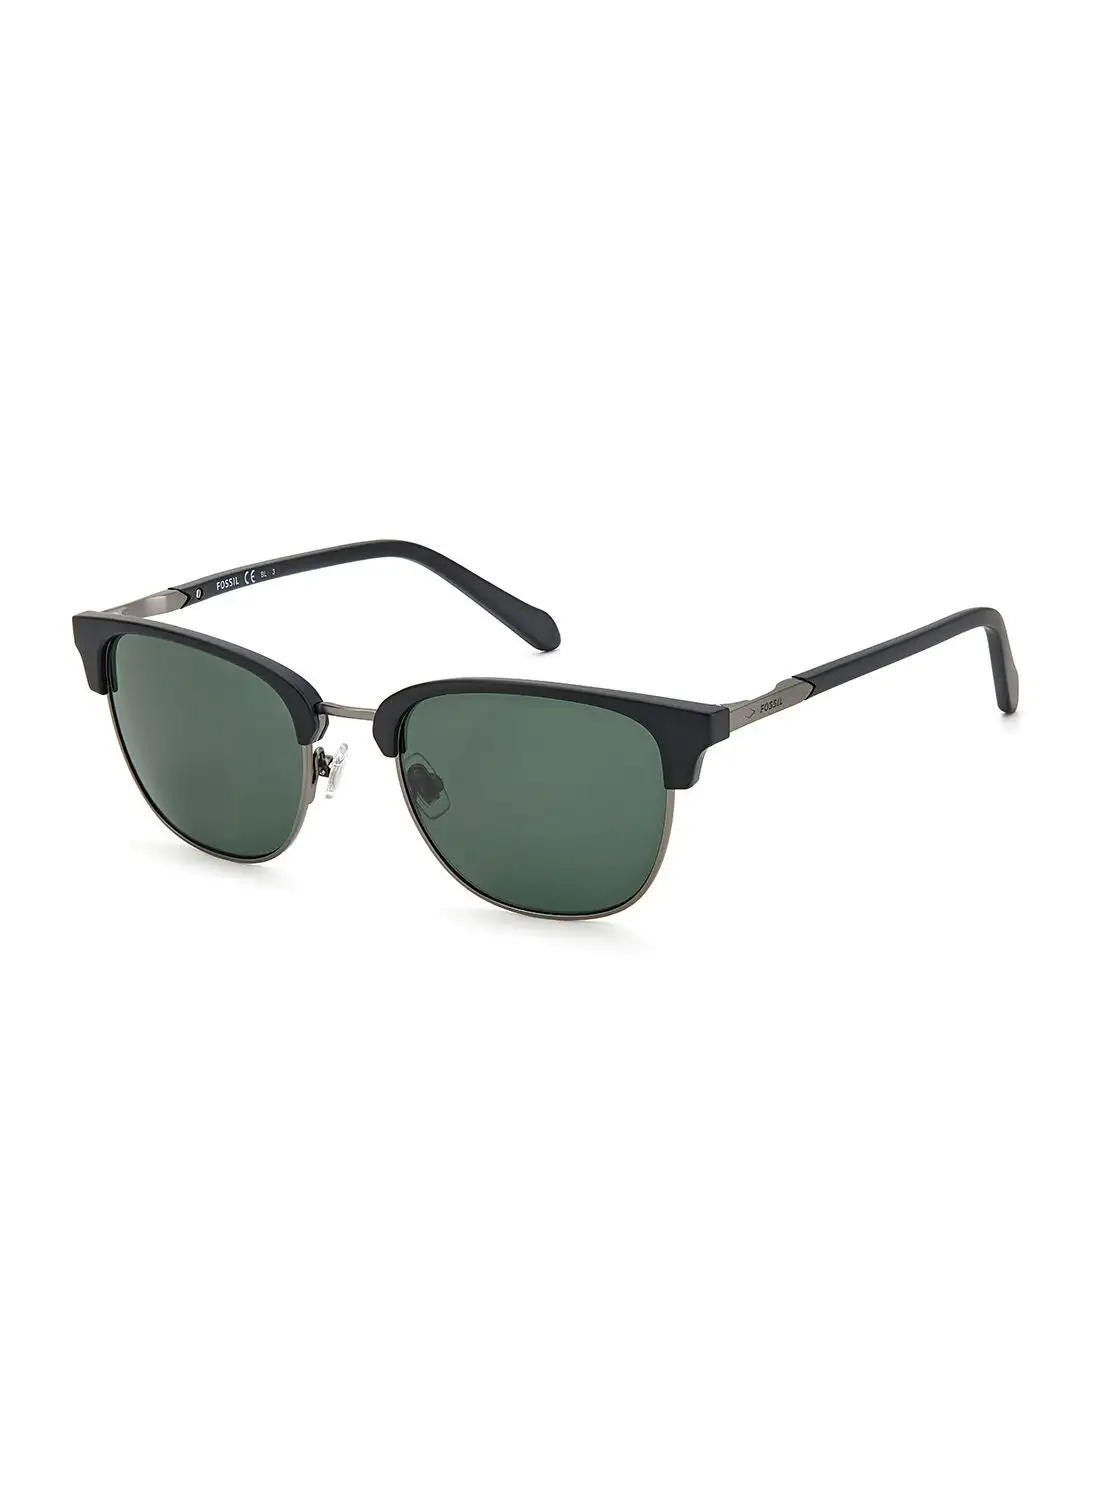 FOSSIL Men's UV Protection Square Sunglasses - Fos 2113/G/S Mtt Black 51 - Lens Size: 51 Mm